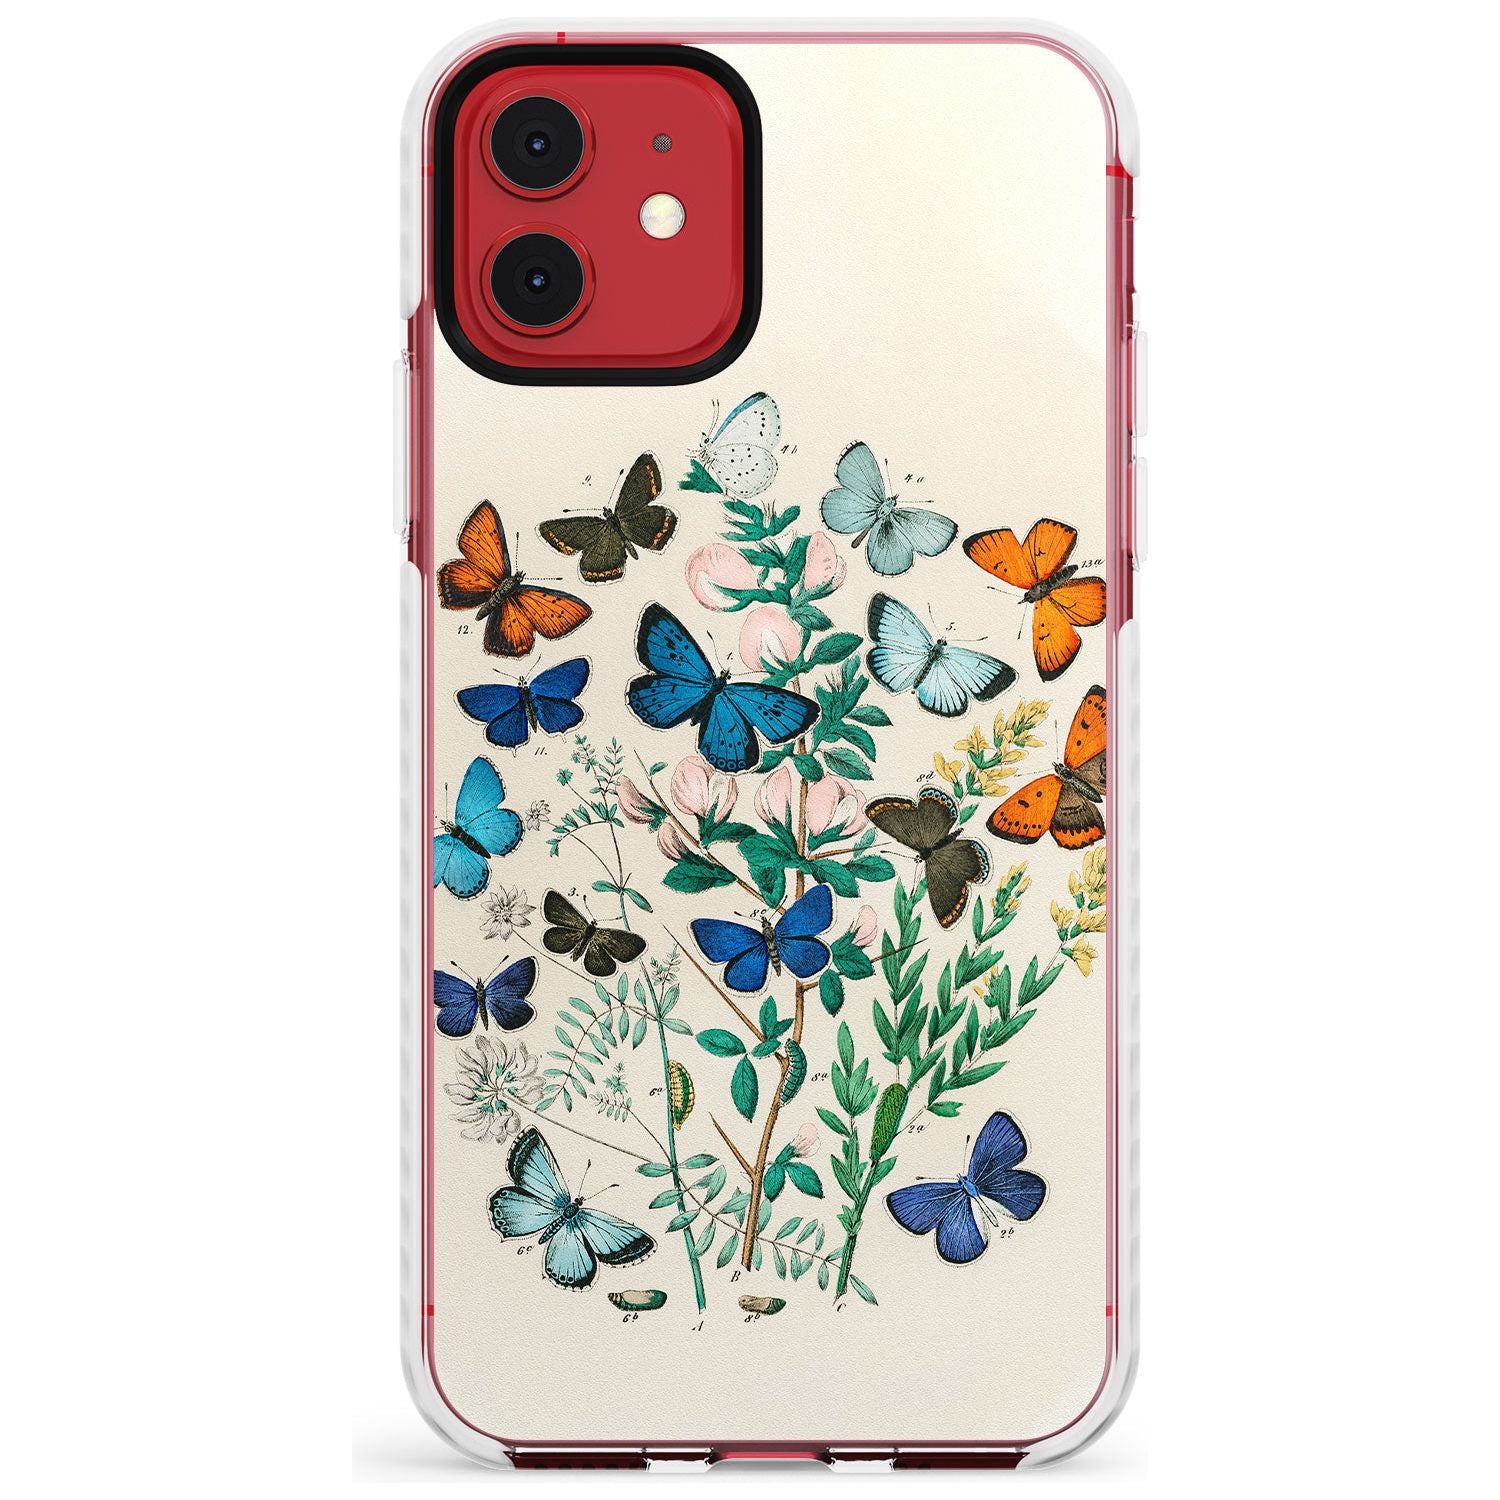 European Butterflies Impact Phone Case for iPhone 11